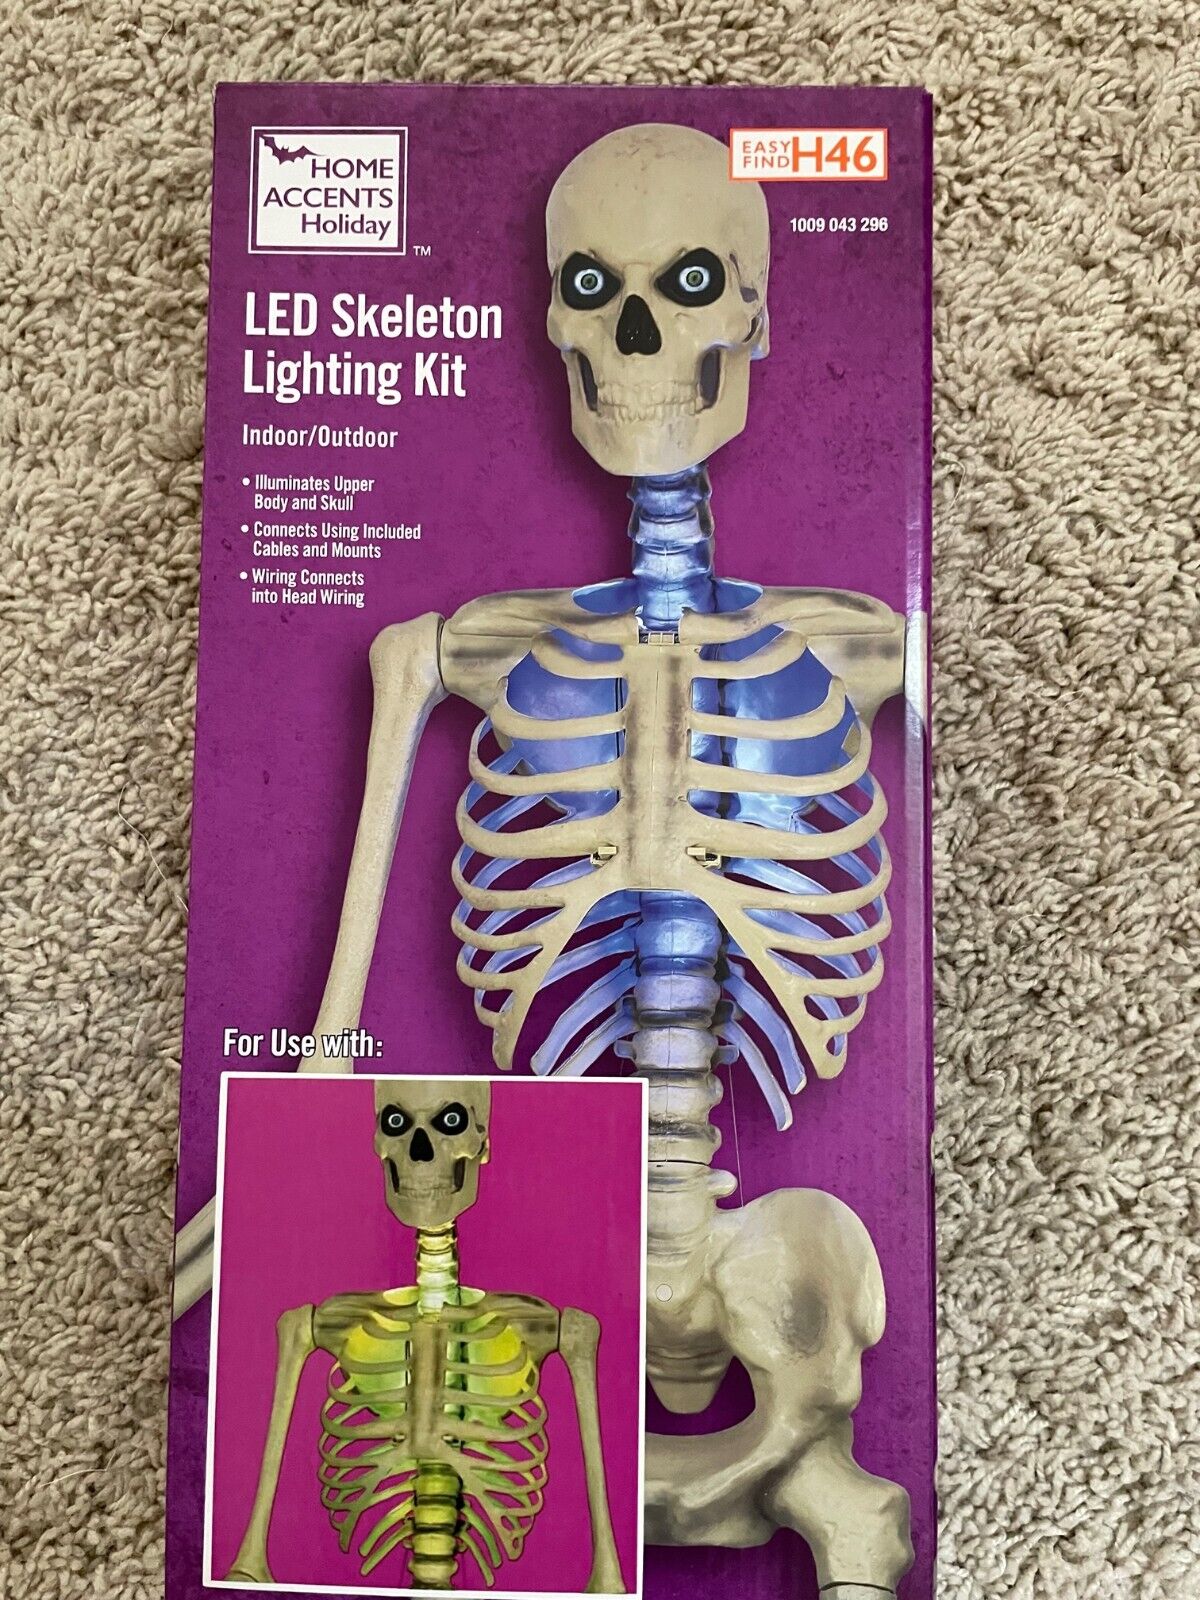 12 Ft Skeleton LED Lighting Kit Home Depot Accents Holiday Halloween BRAND NEW